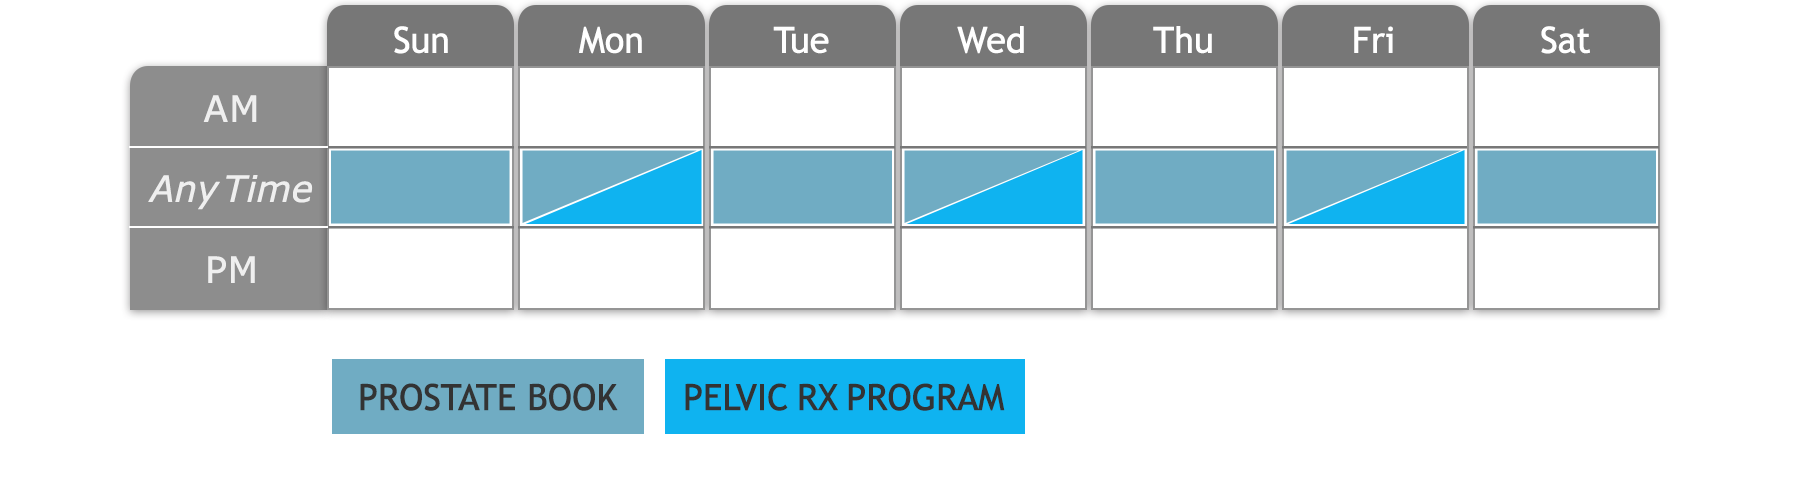 prostatectomy program pre-surgical weekly routine calendar desktop